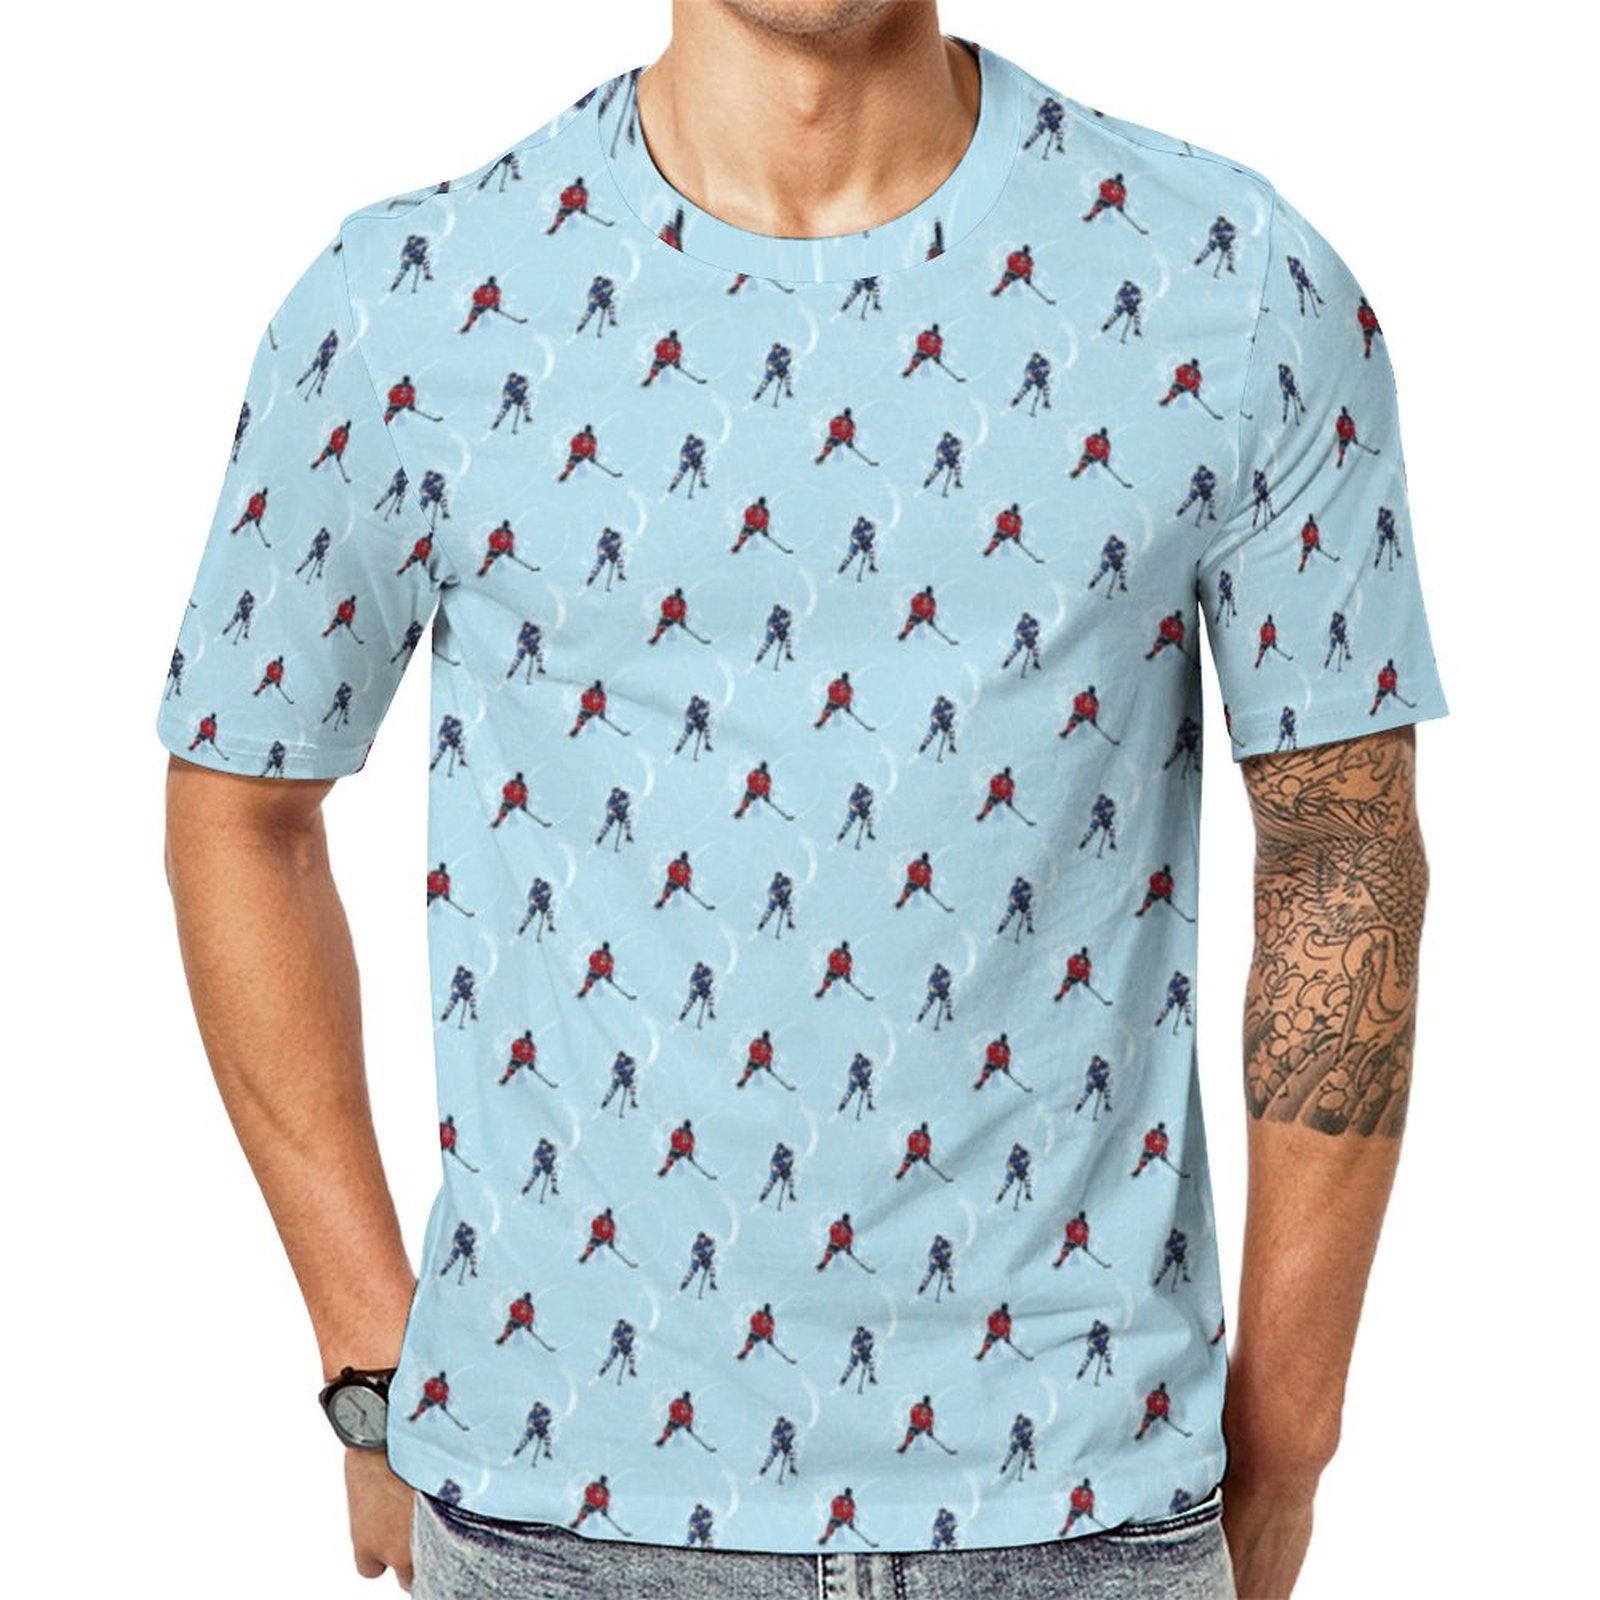 Blue Ice Hockey Short Sleeve Print Unisex Tshirt Summer Casual Tees for Men and Women Coolcoshirts